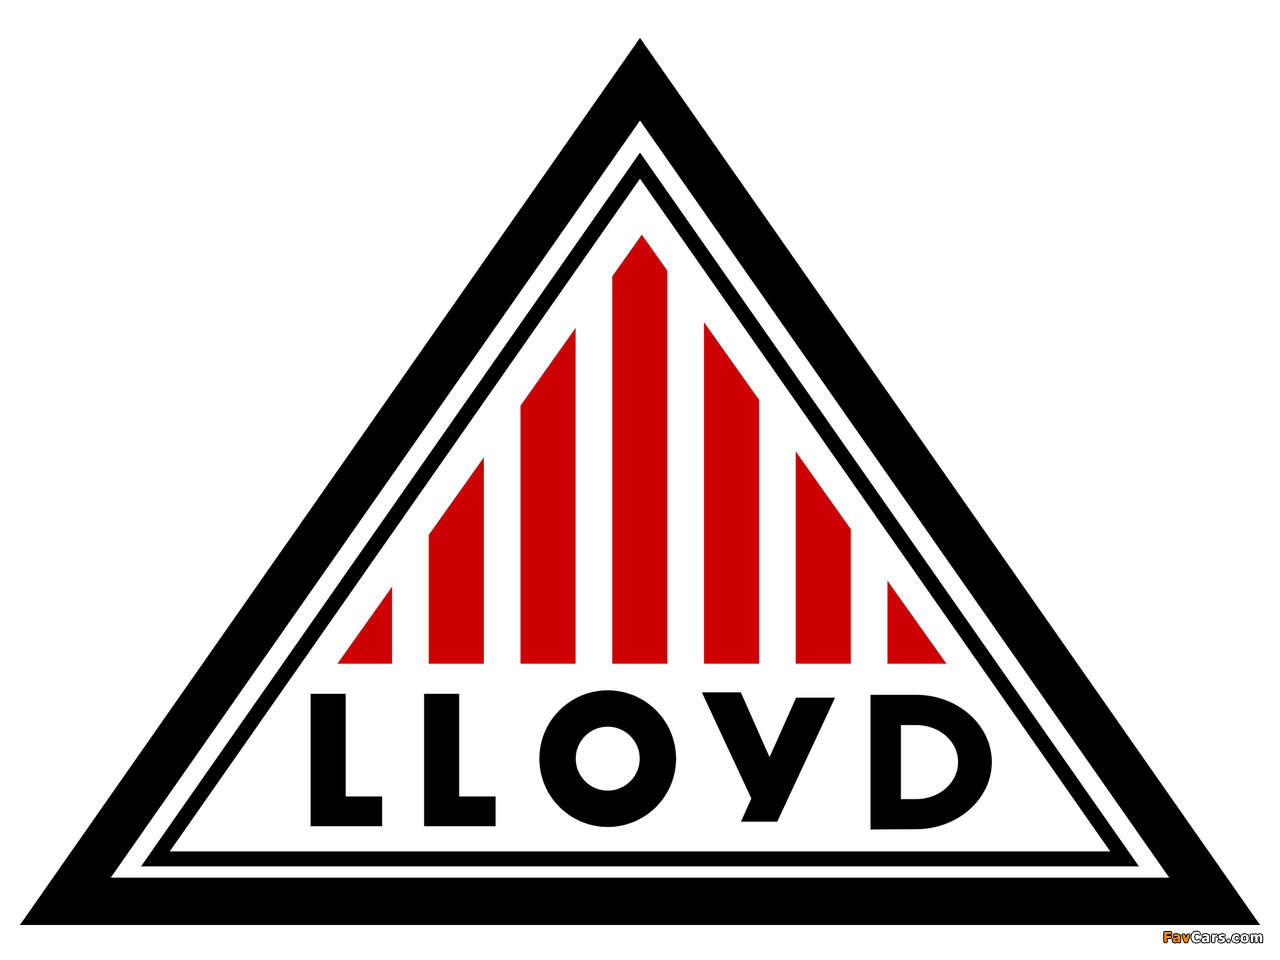 Lloyd wallpapers (1280 x 960)